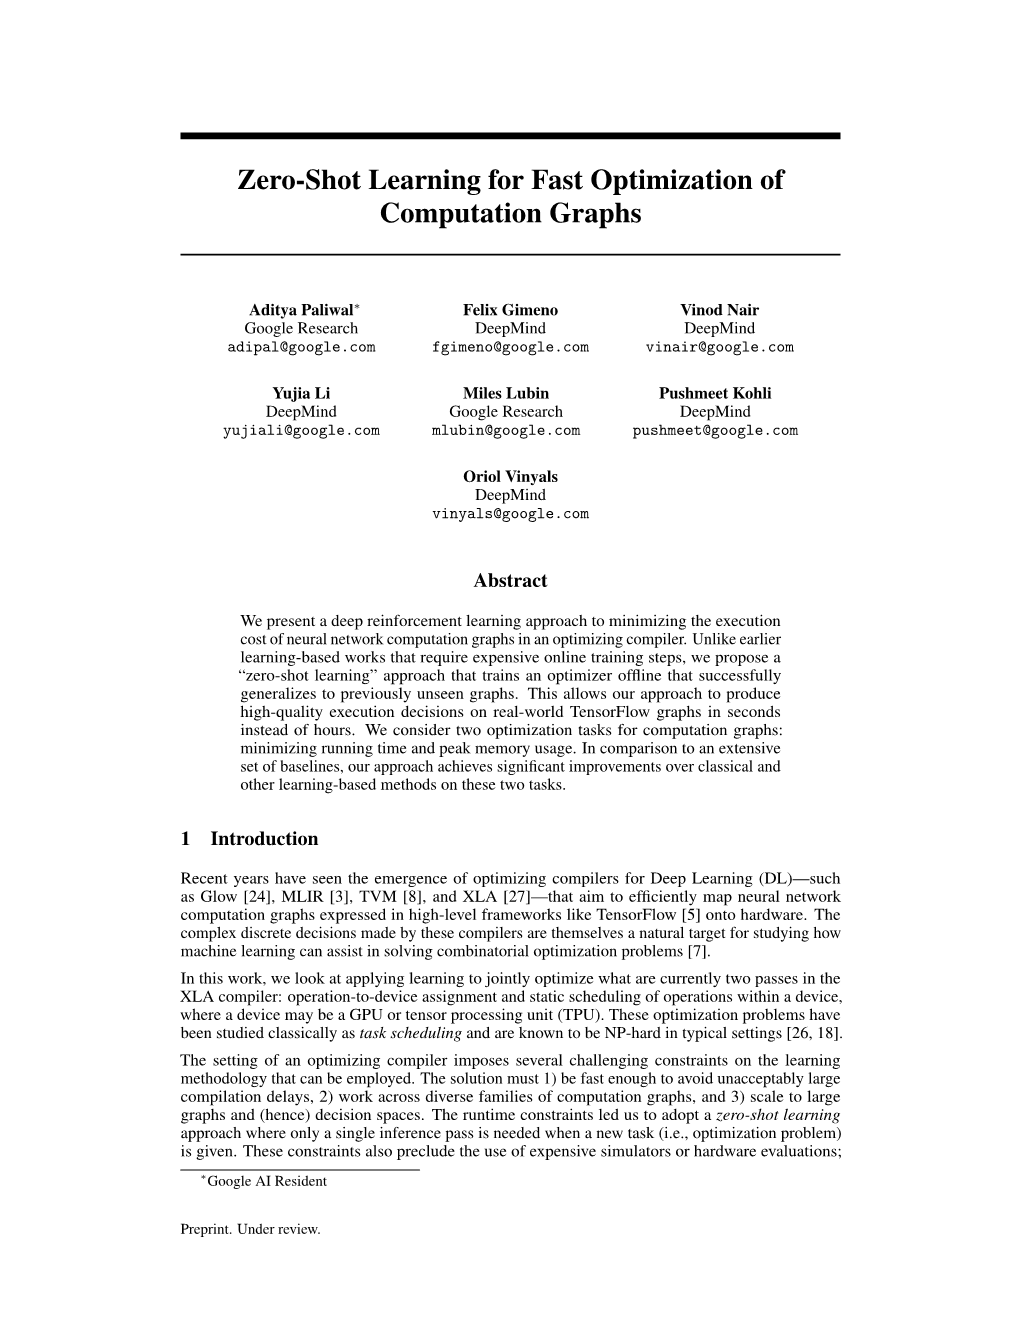 Zero-Shot Learning for Fast Optimization of Computation Graphs